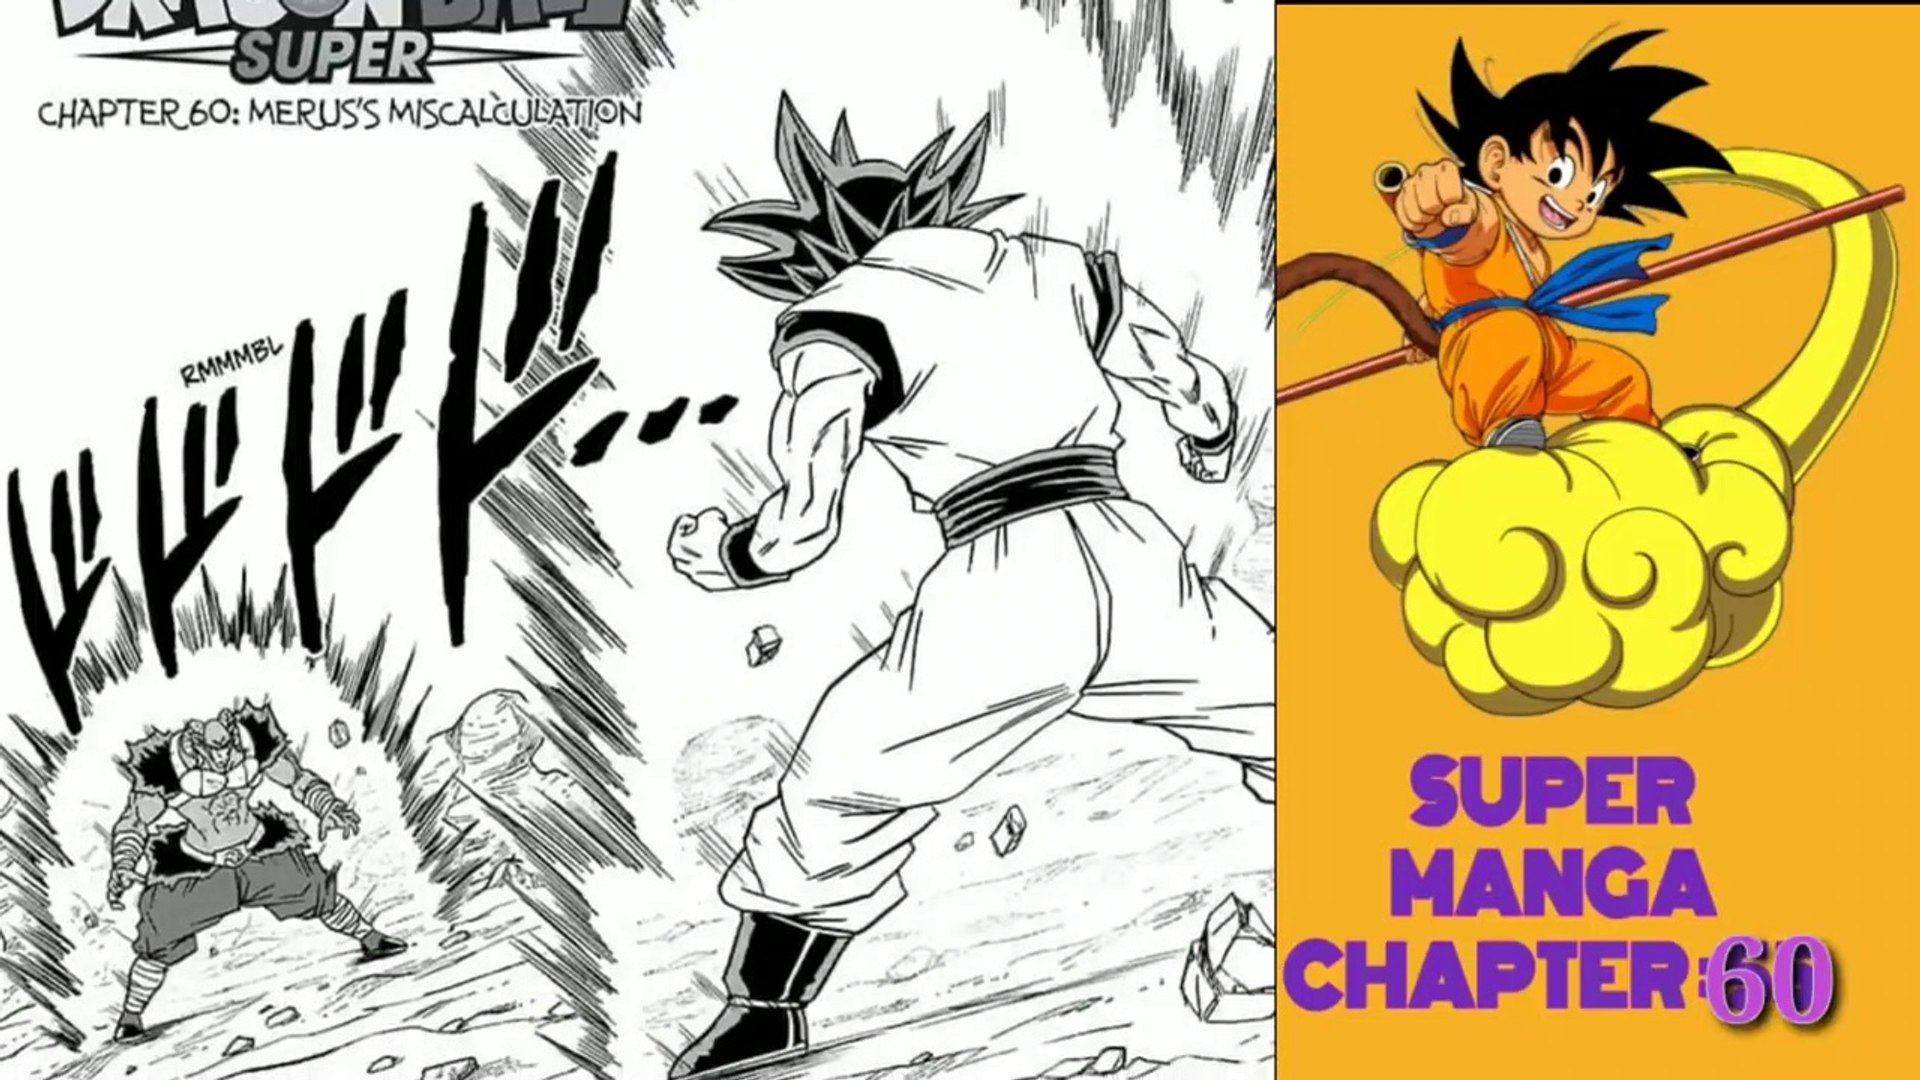 Vegeta Finally Surpassed Goku - Dragon Ball Super 2 Ultra Instinct Goku  Defeated Manga Chapter 60 || dbz super manga ep 60 in hindi || dbz super  manga by obhai gaming |